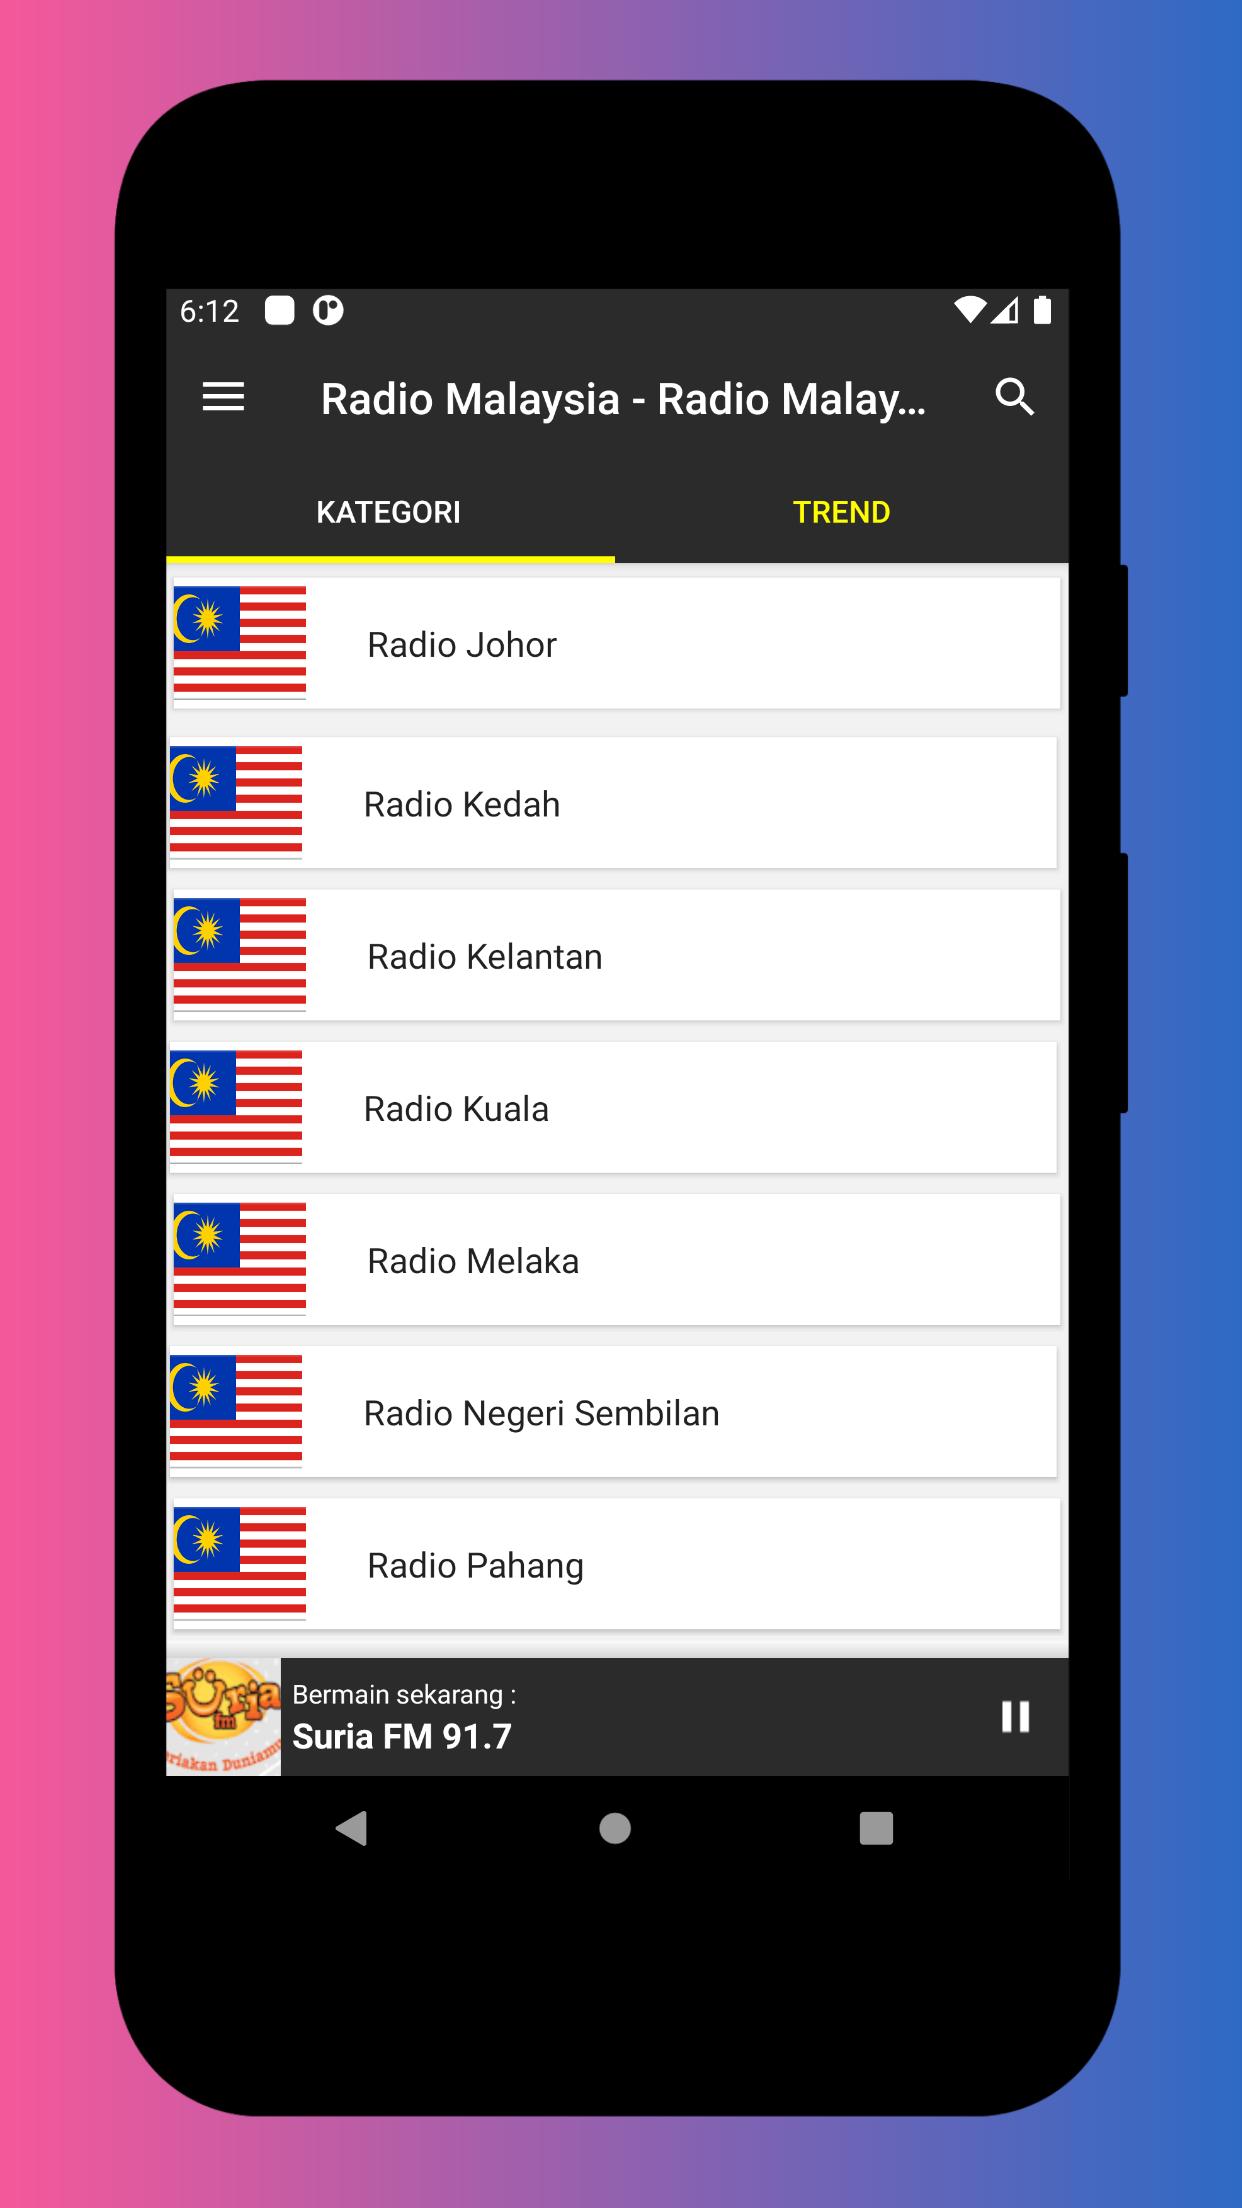 Kedah radio Temubual radio